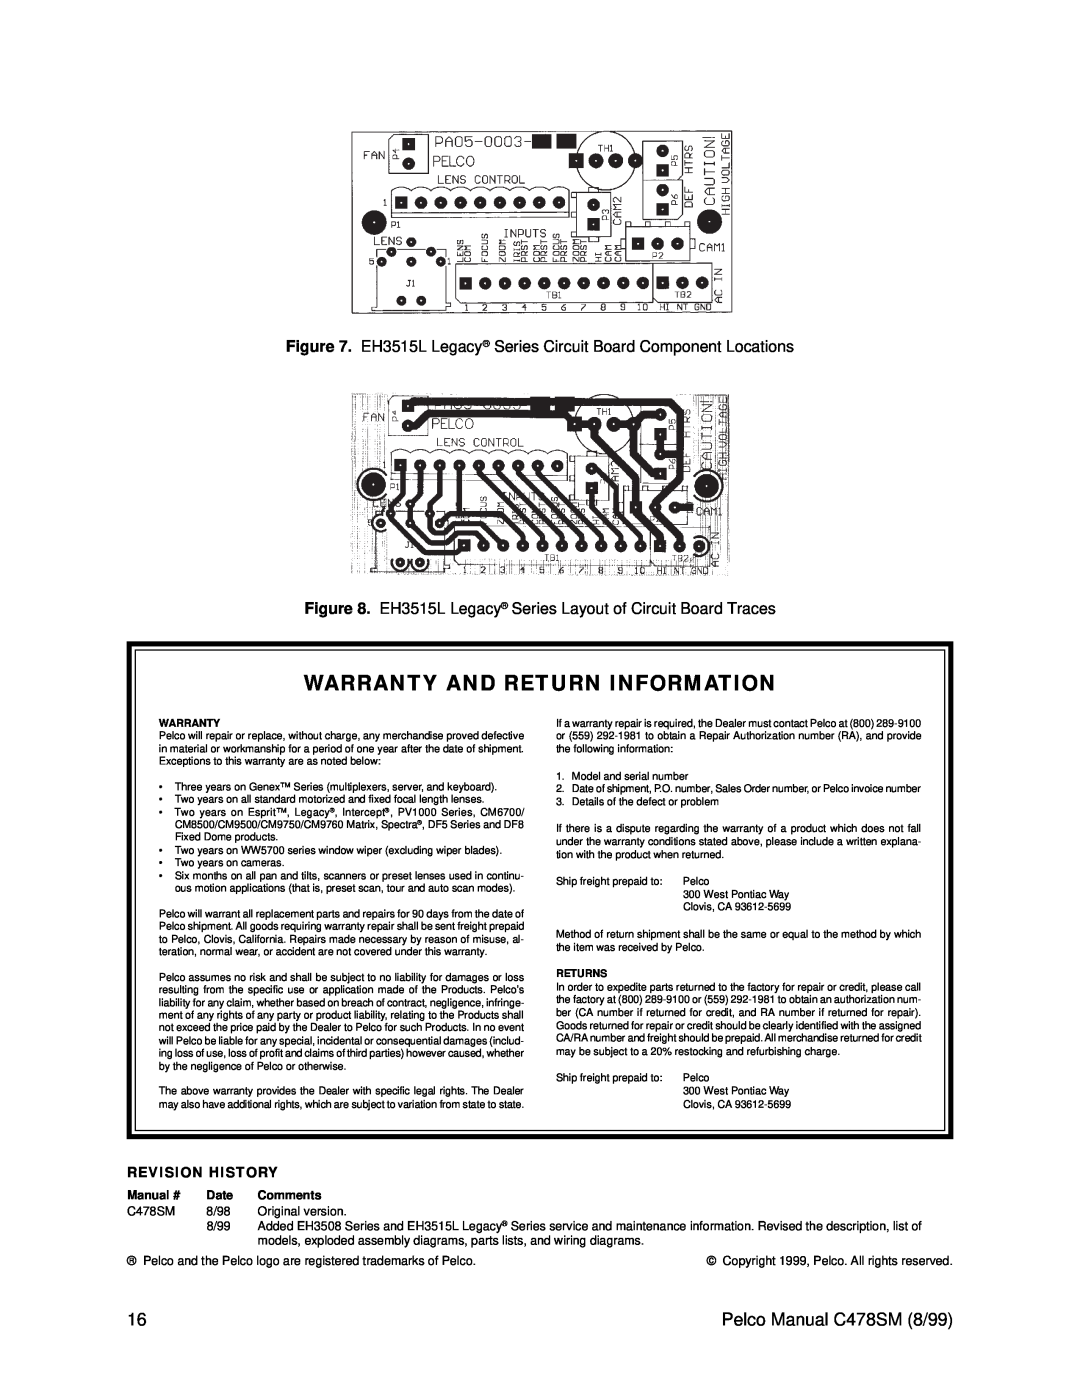 Pelco EH3500 service manual Warranty And Return Information, Pelco Manual C478SM 8/99 